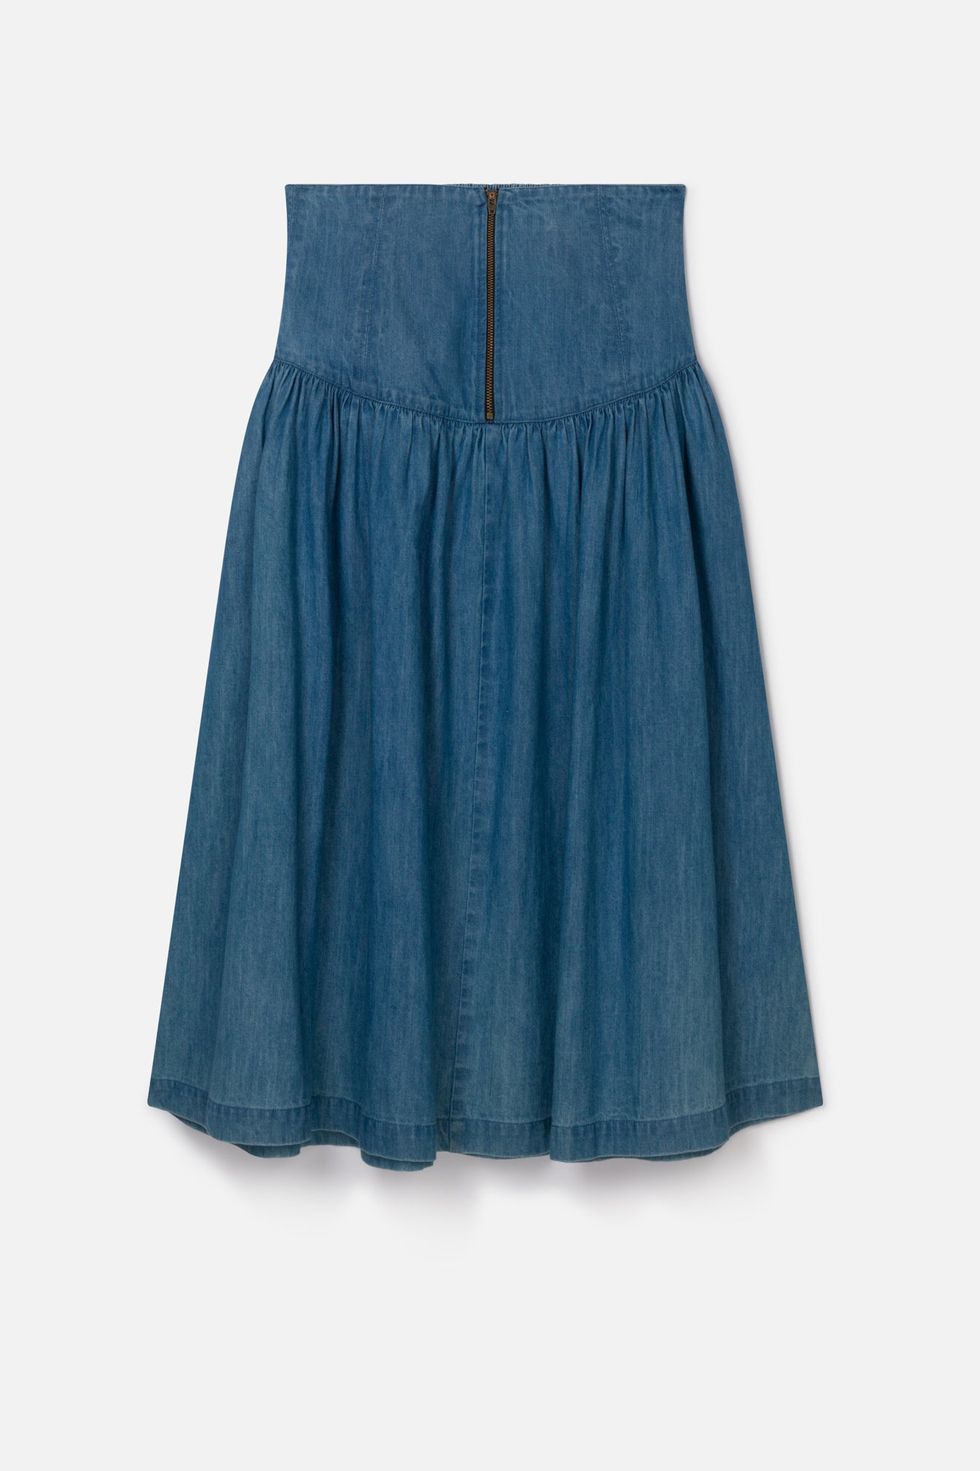 Best denim skirts 2023: 15 women's denim skirts styles to buy now